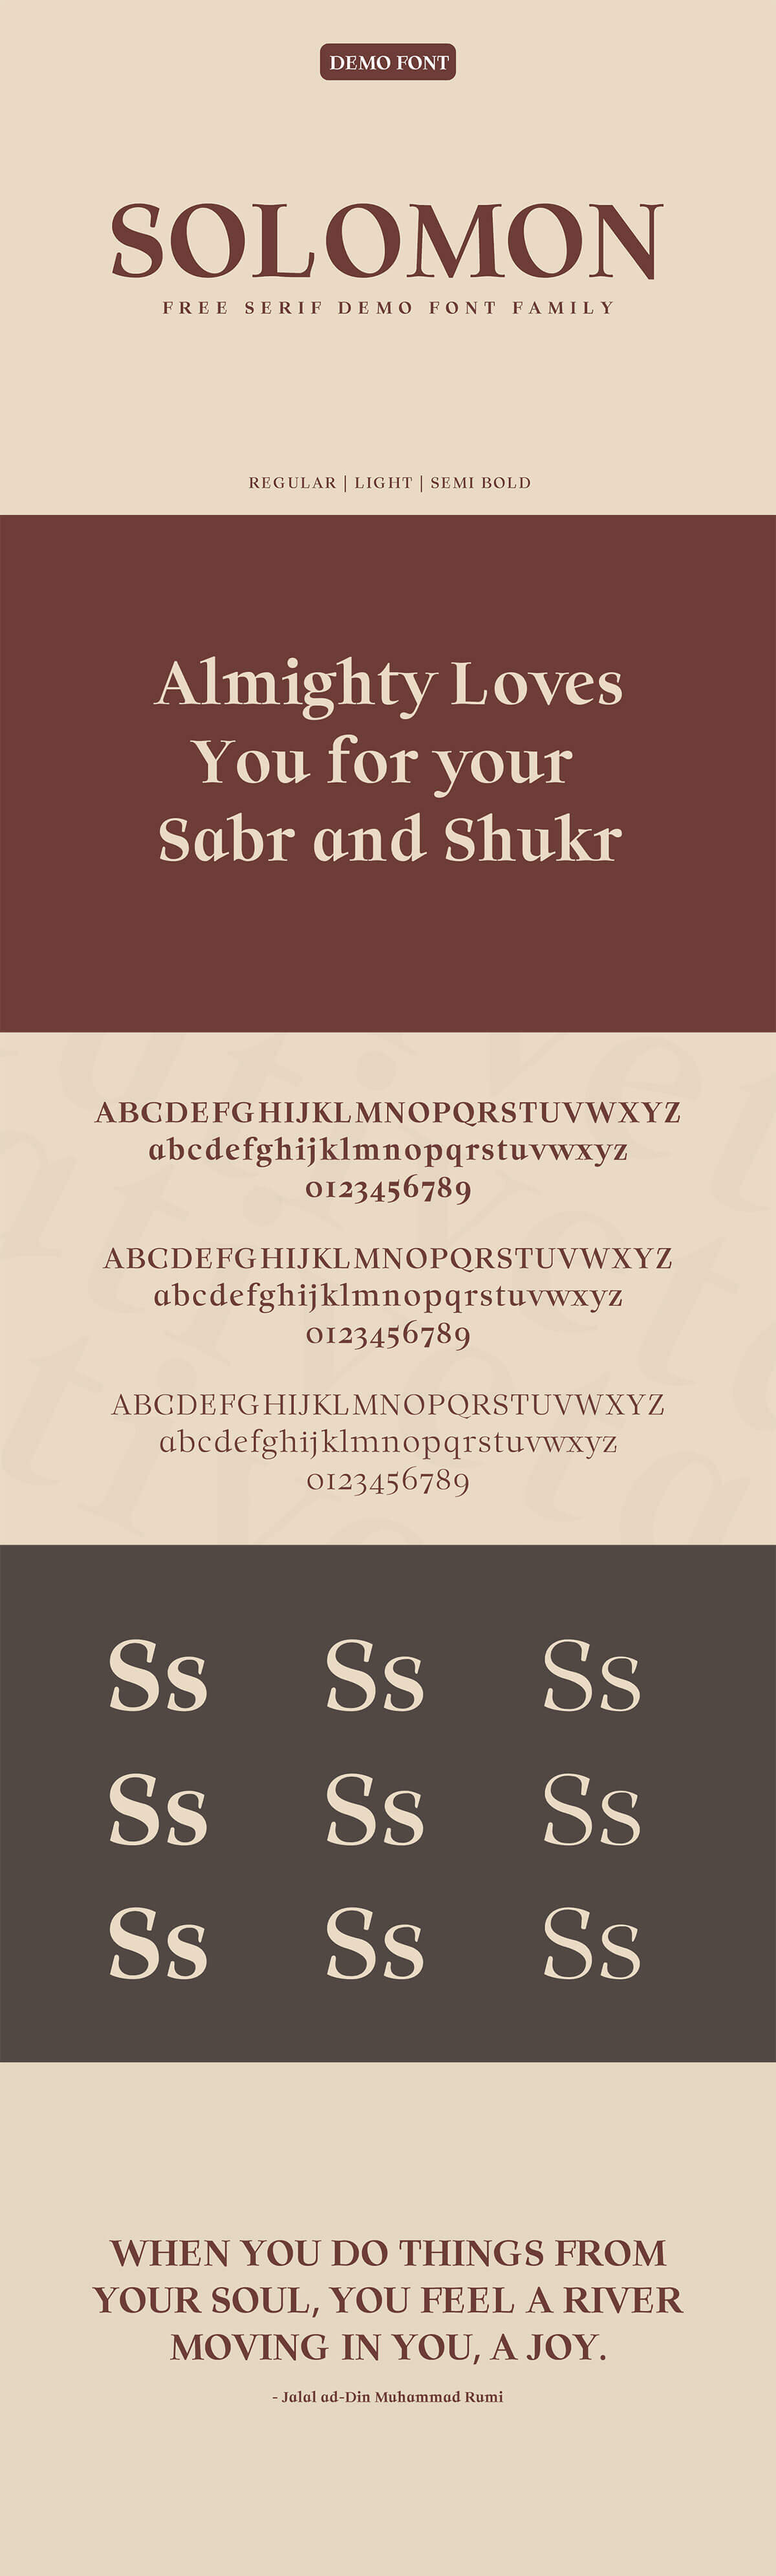 Free Solomon Serif Font Family